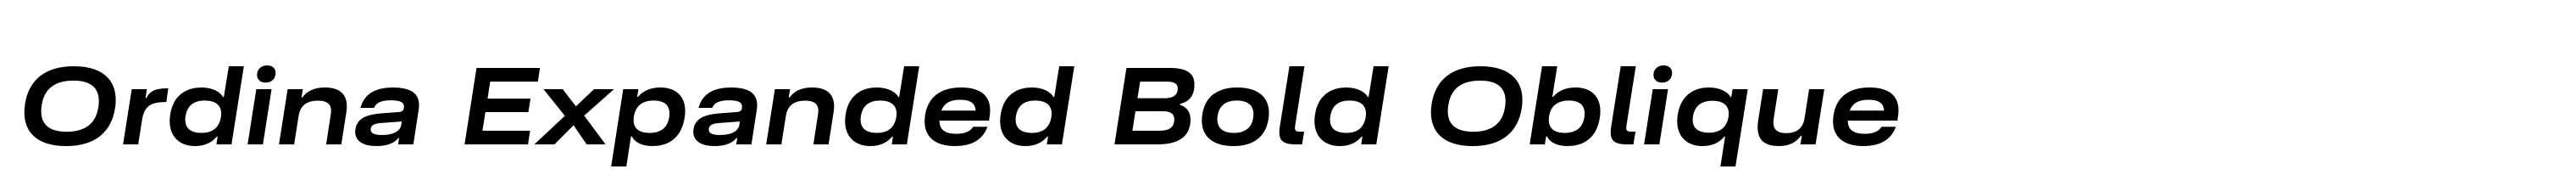 Ordina Expanded Bold Oblique